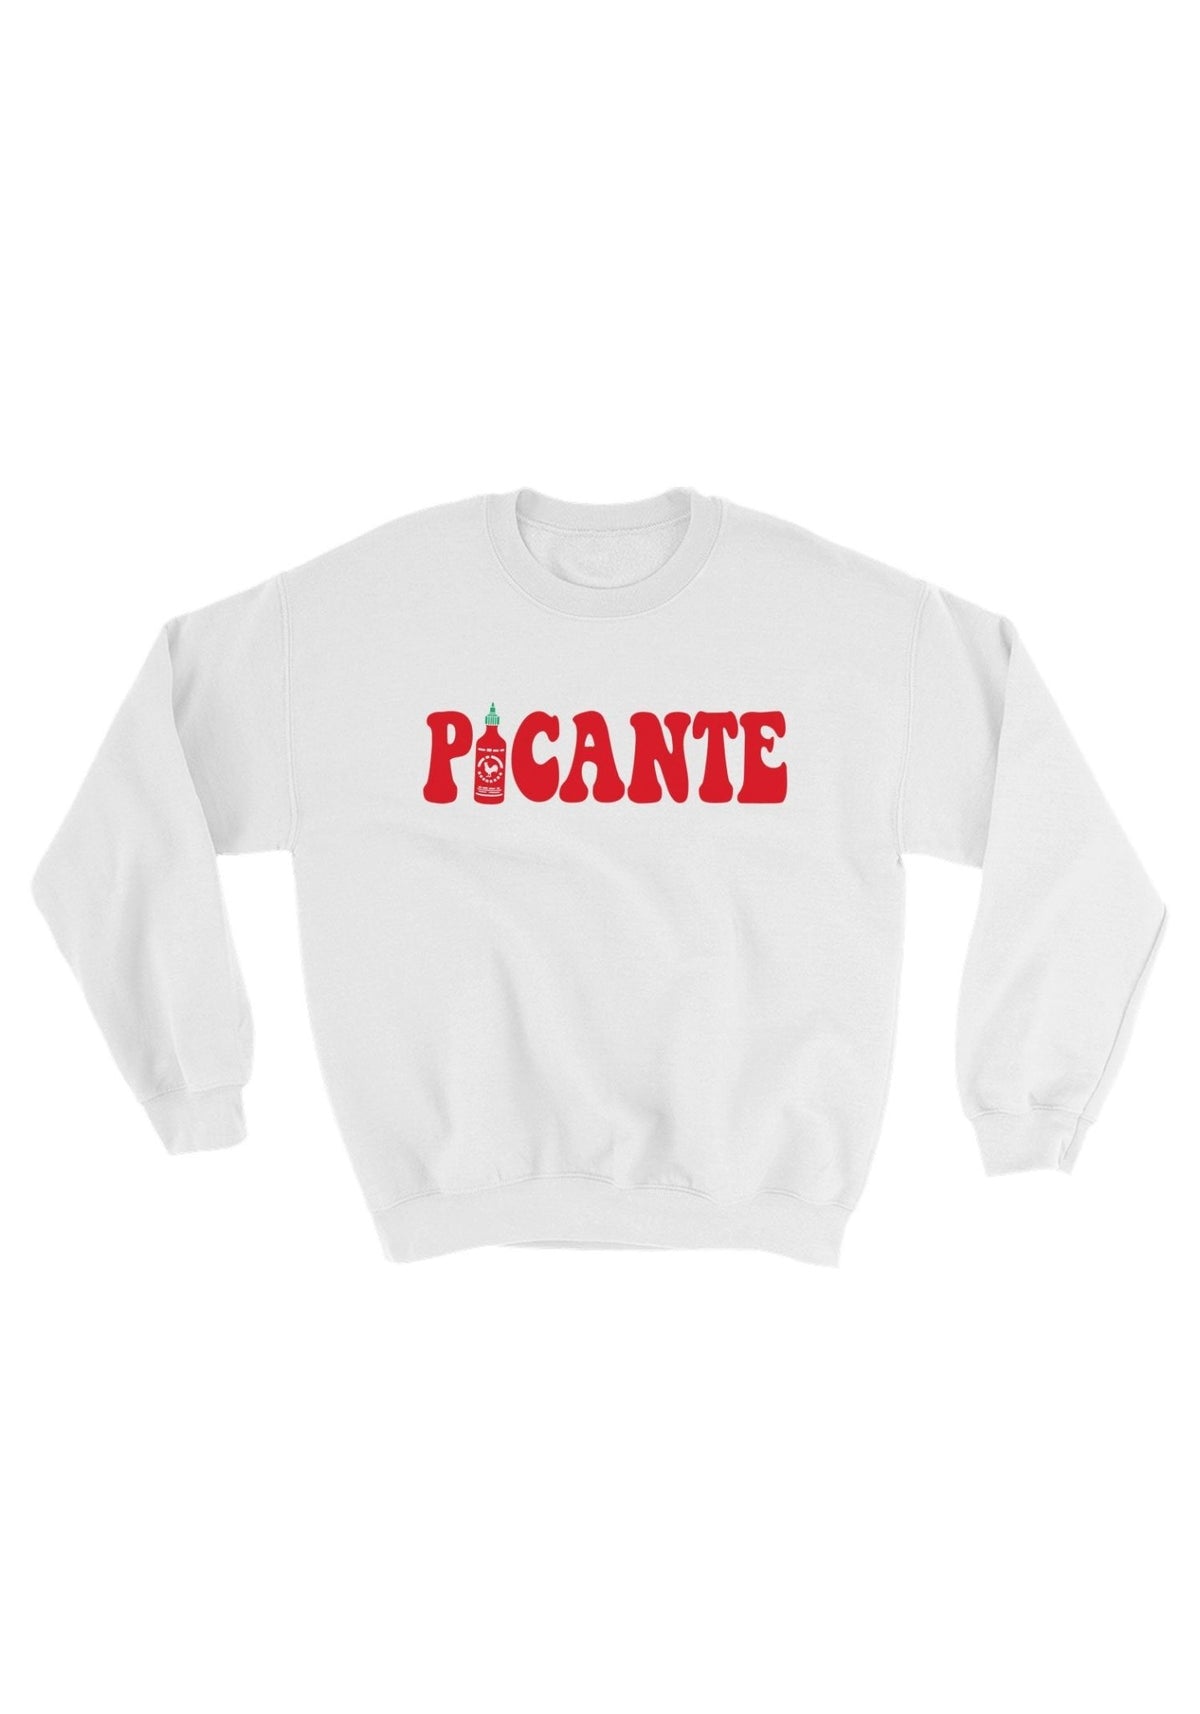 Picante Sweatshirt by kaeraz chili hot sauce pepper